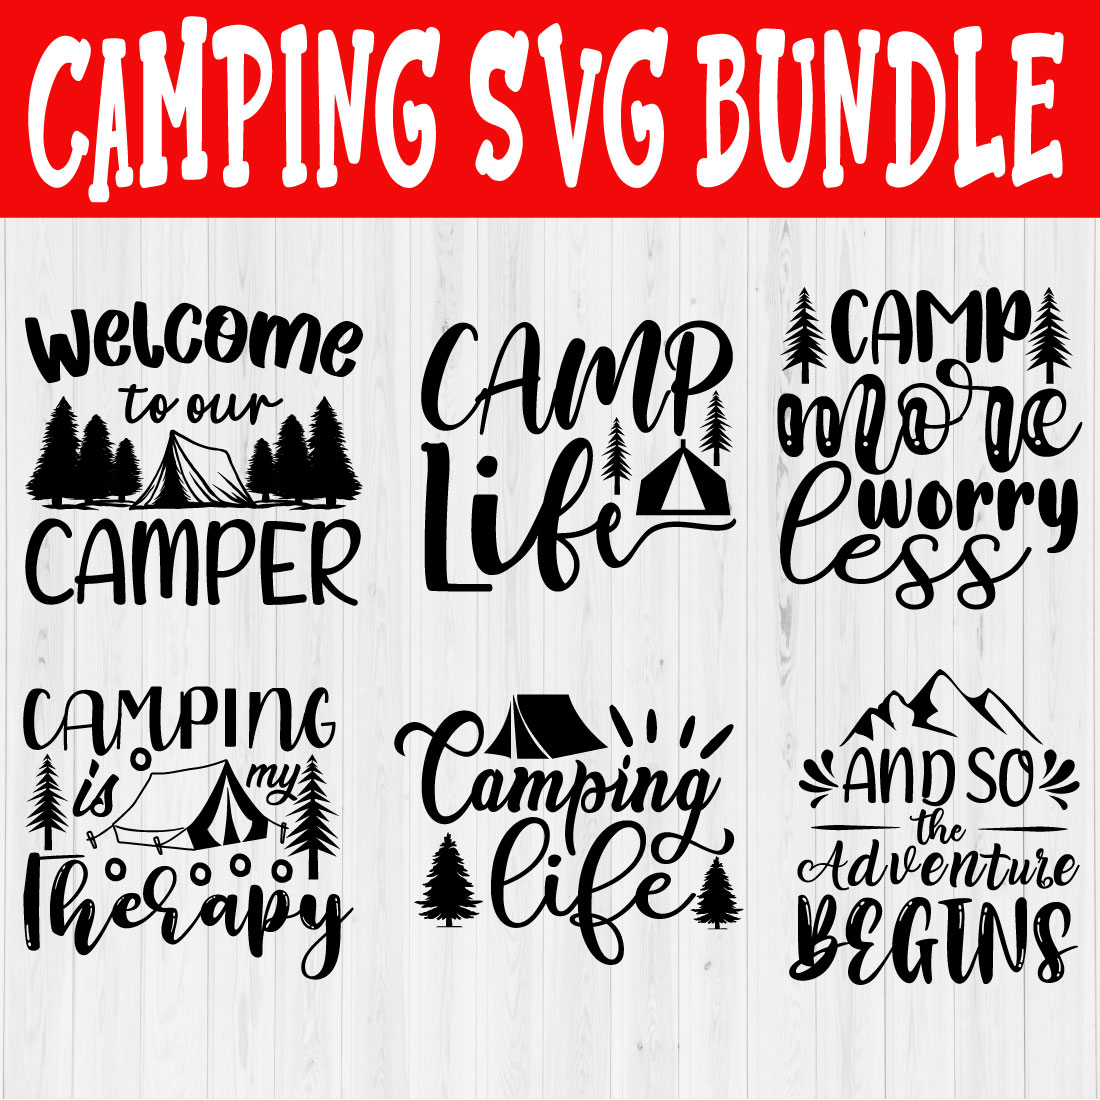 Camping Svg Bundle Vol1 cover image.